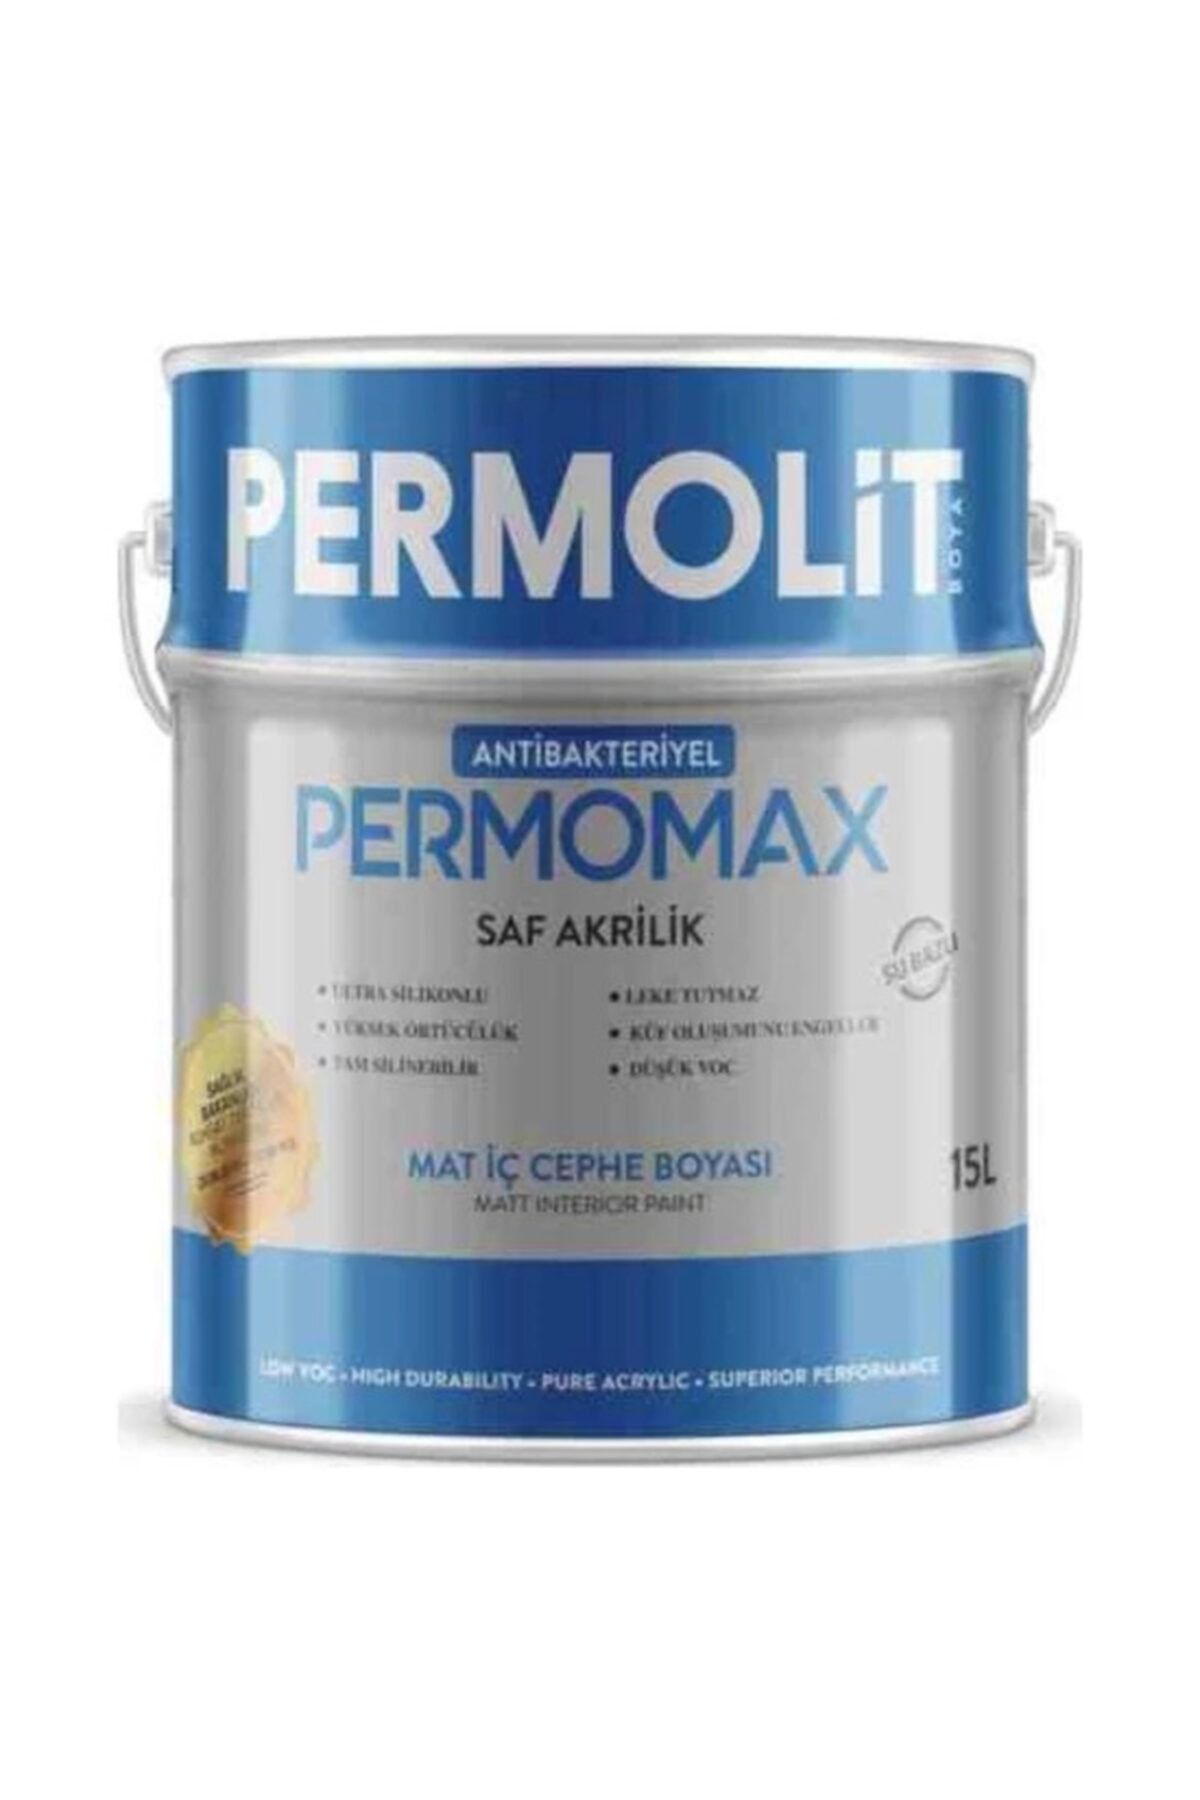 Permolit Permomax Antibakteriyel Mat Iç Cephe Boyası 2,5 Lt